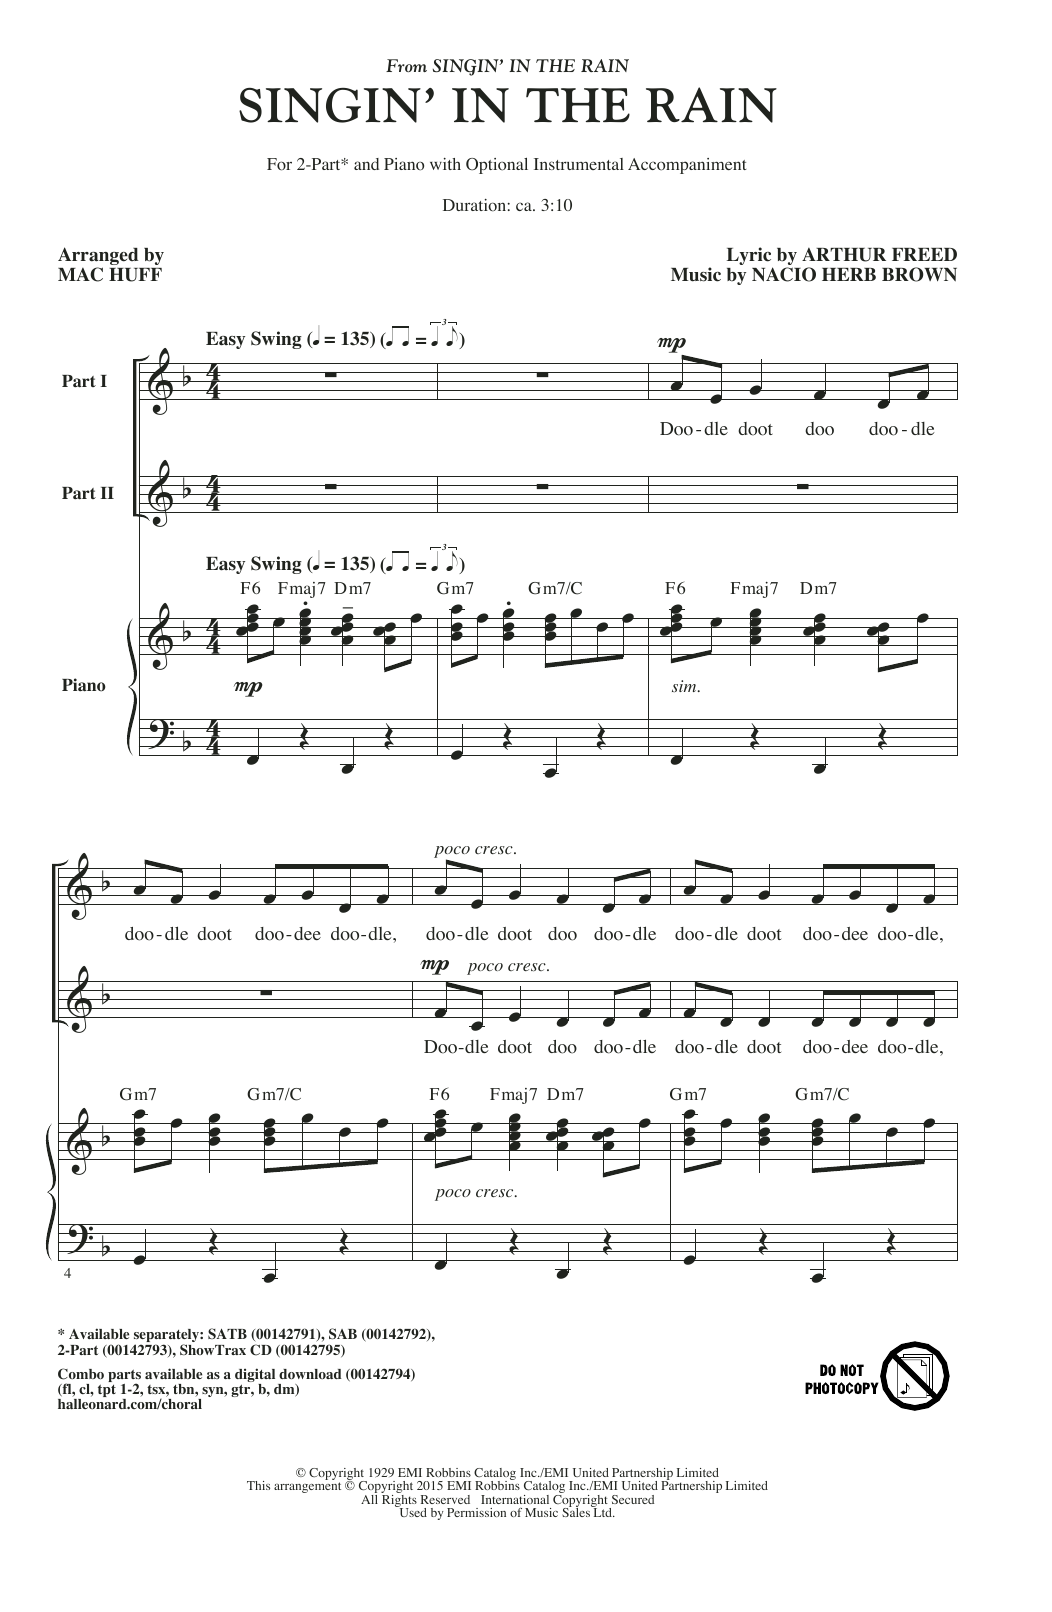 Gene Kelly Singin' In The Rain (arr. Mac Huff) Sheet Music Notes & Chords for 2-Part Choir - Download or Print PDF